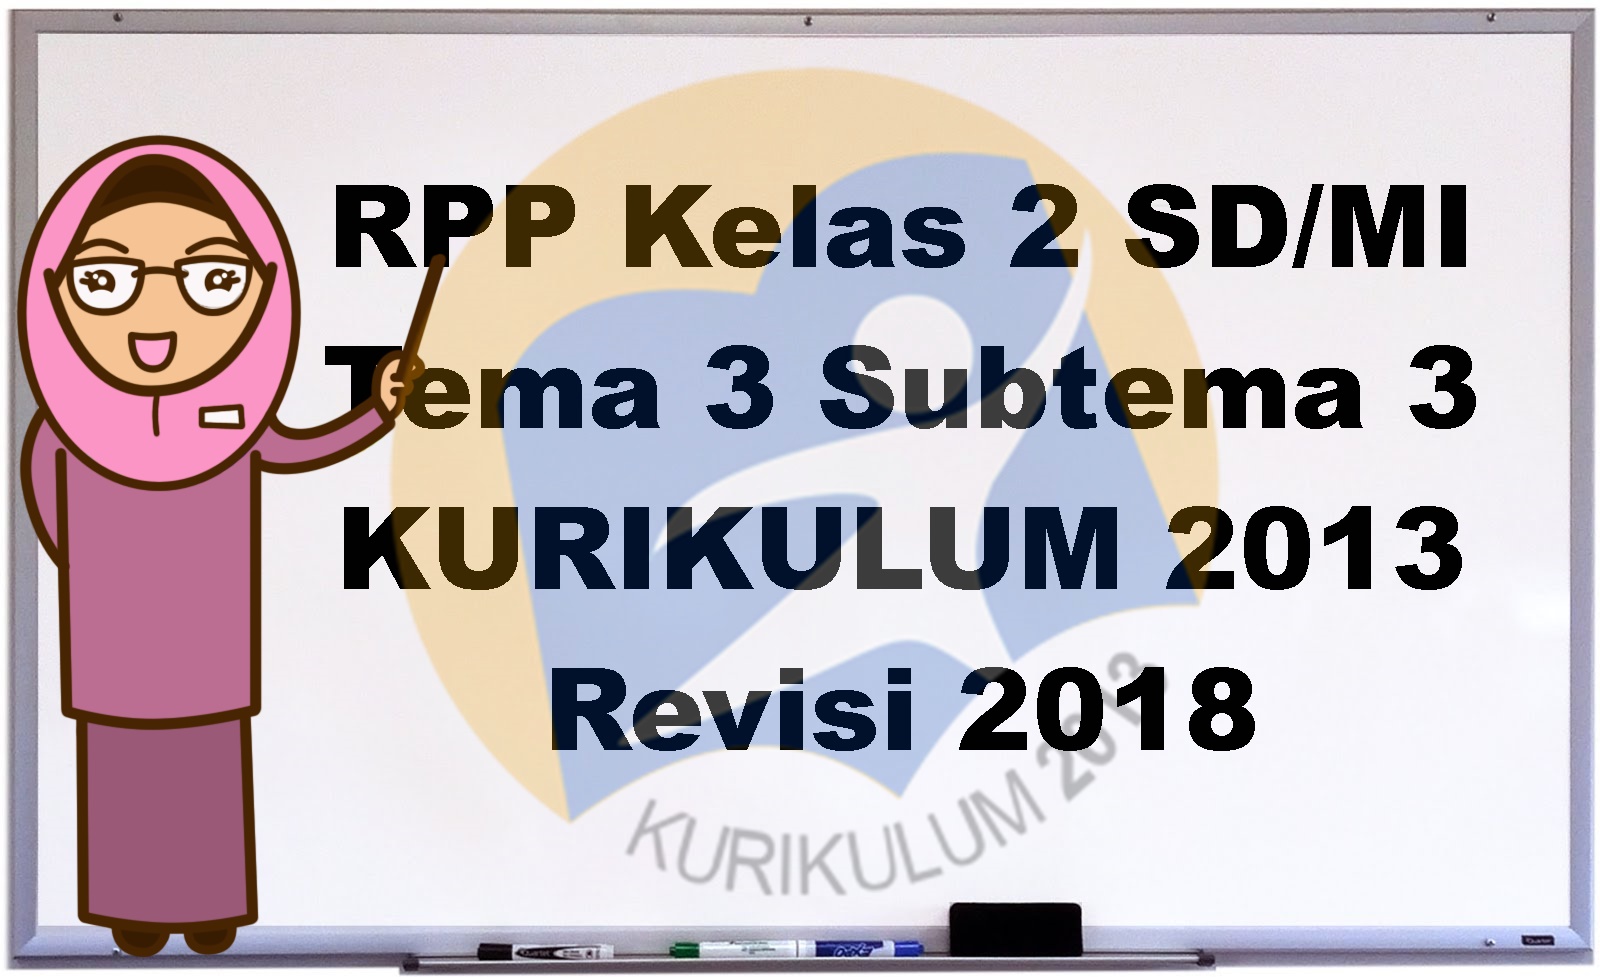 rpp kelas 3 sd k13 revisi 2018